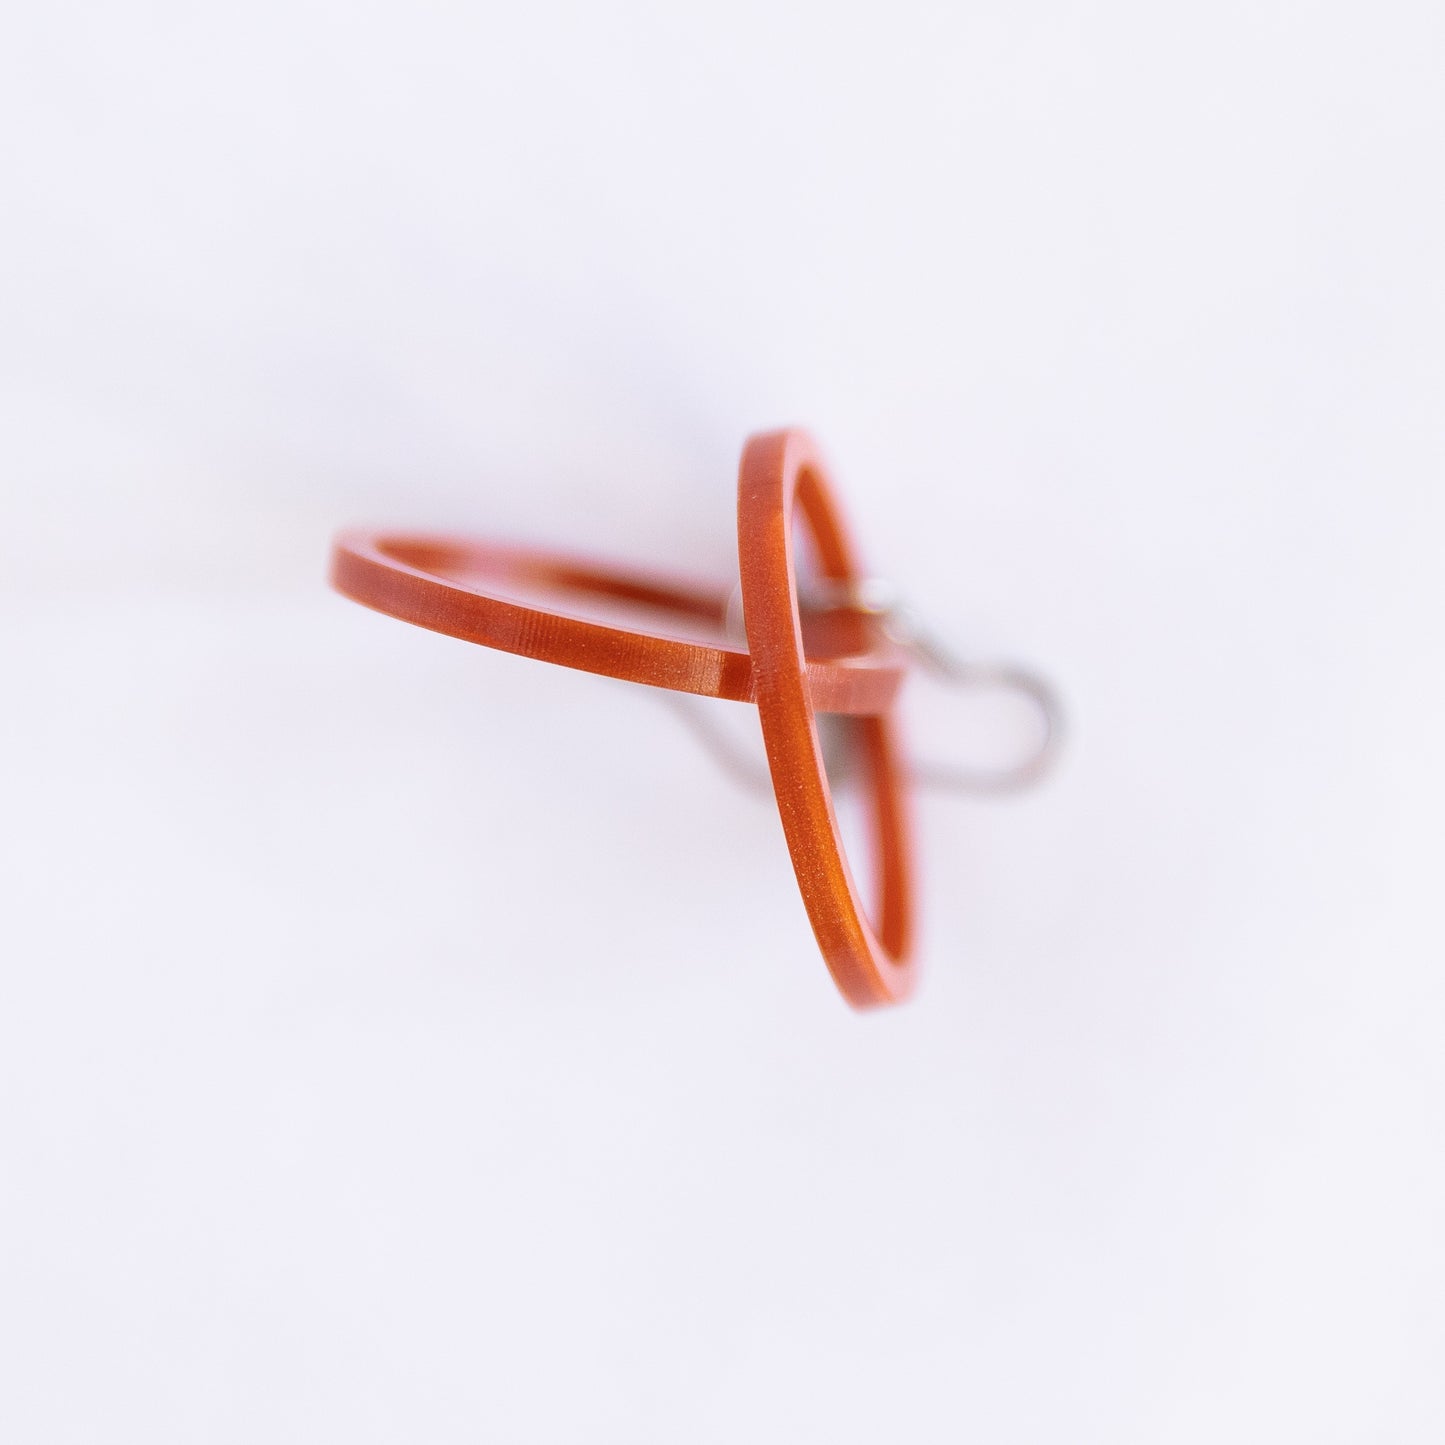 THE STAPLE HOOPS in Burnt Orange/ Lightweight Acrylic Statement Hoop Earrings